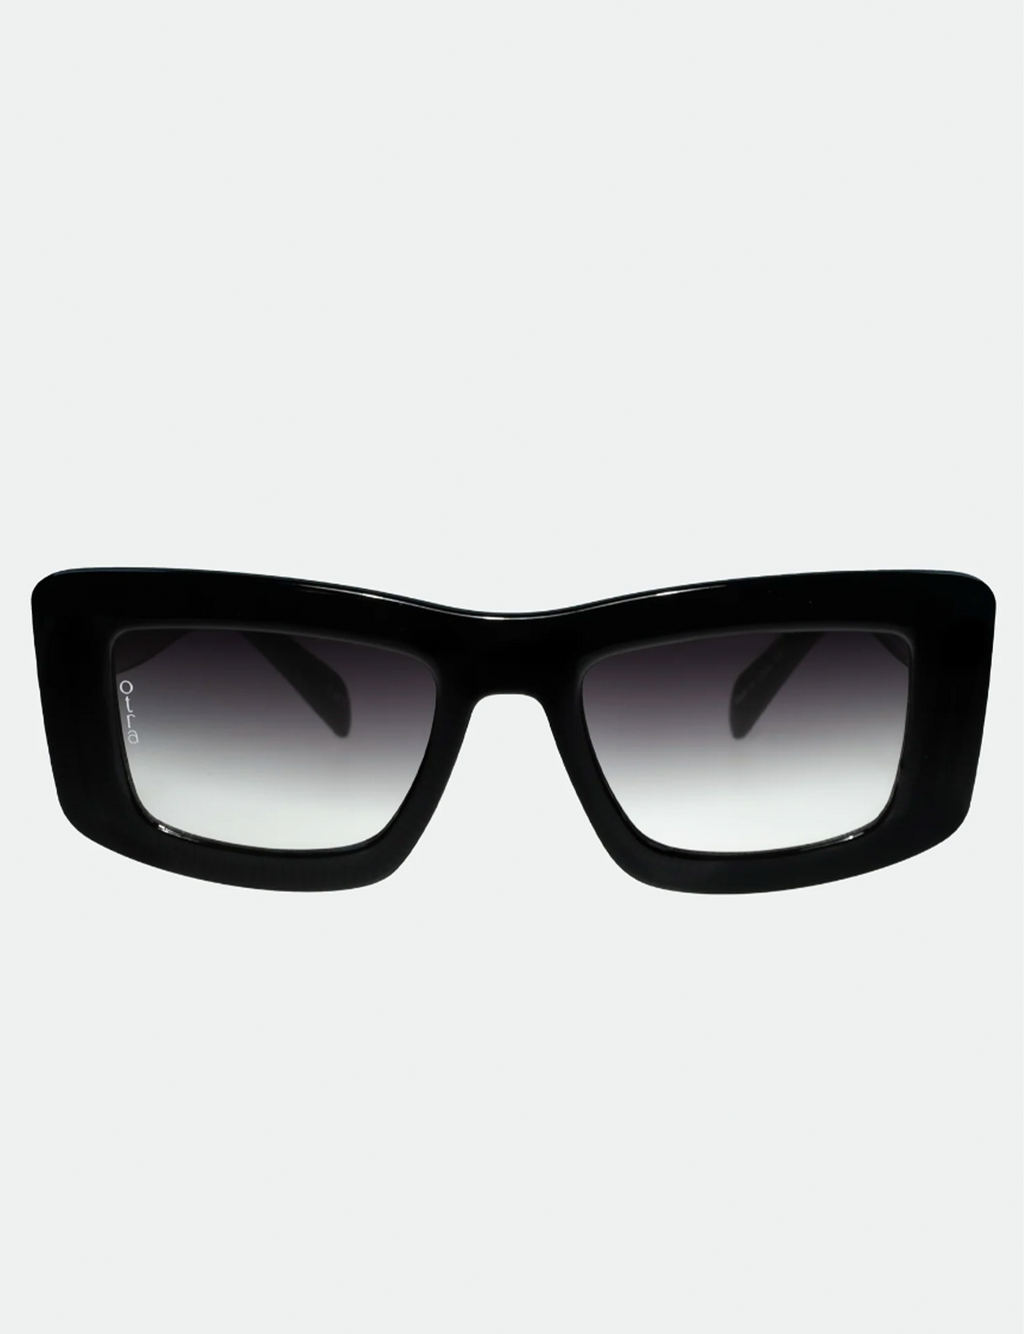 Marsha Sunglasses, Black/Smoke Fade